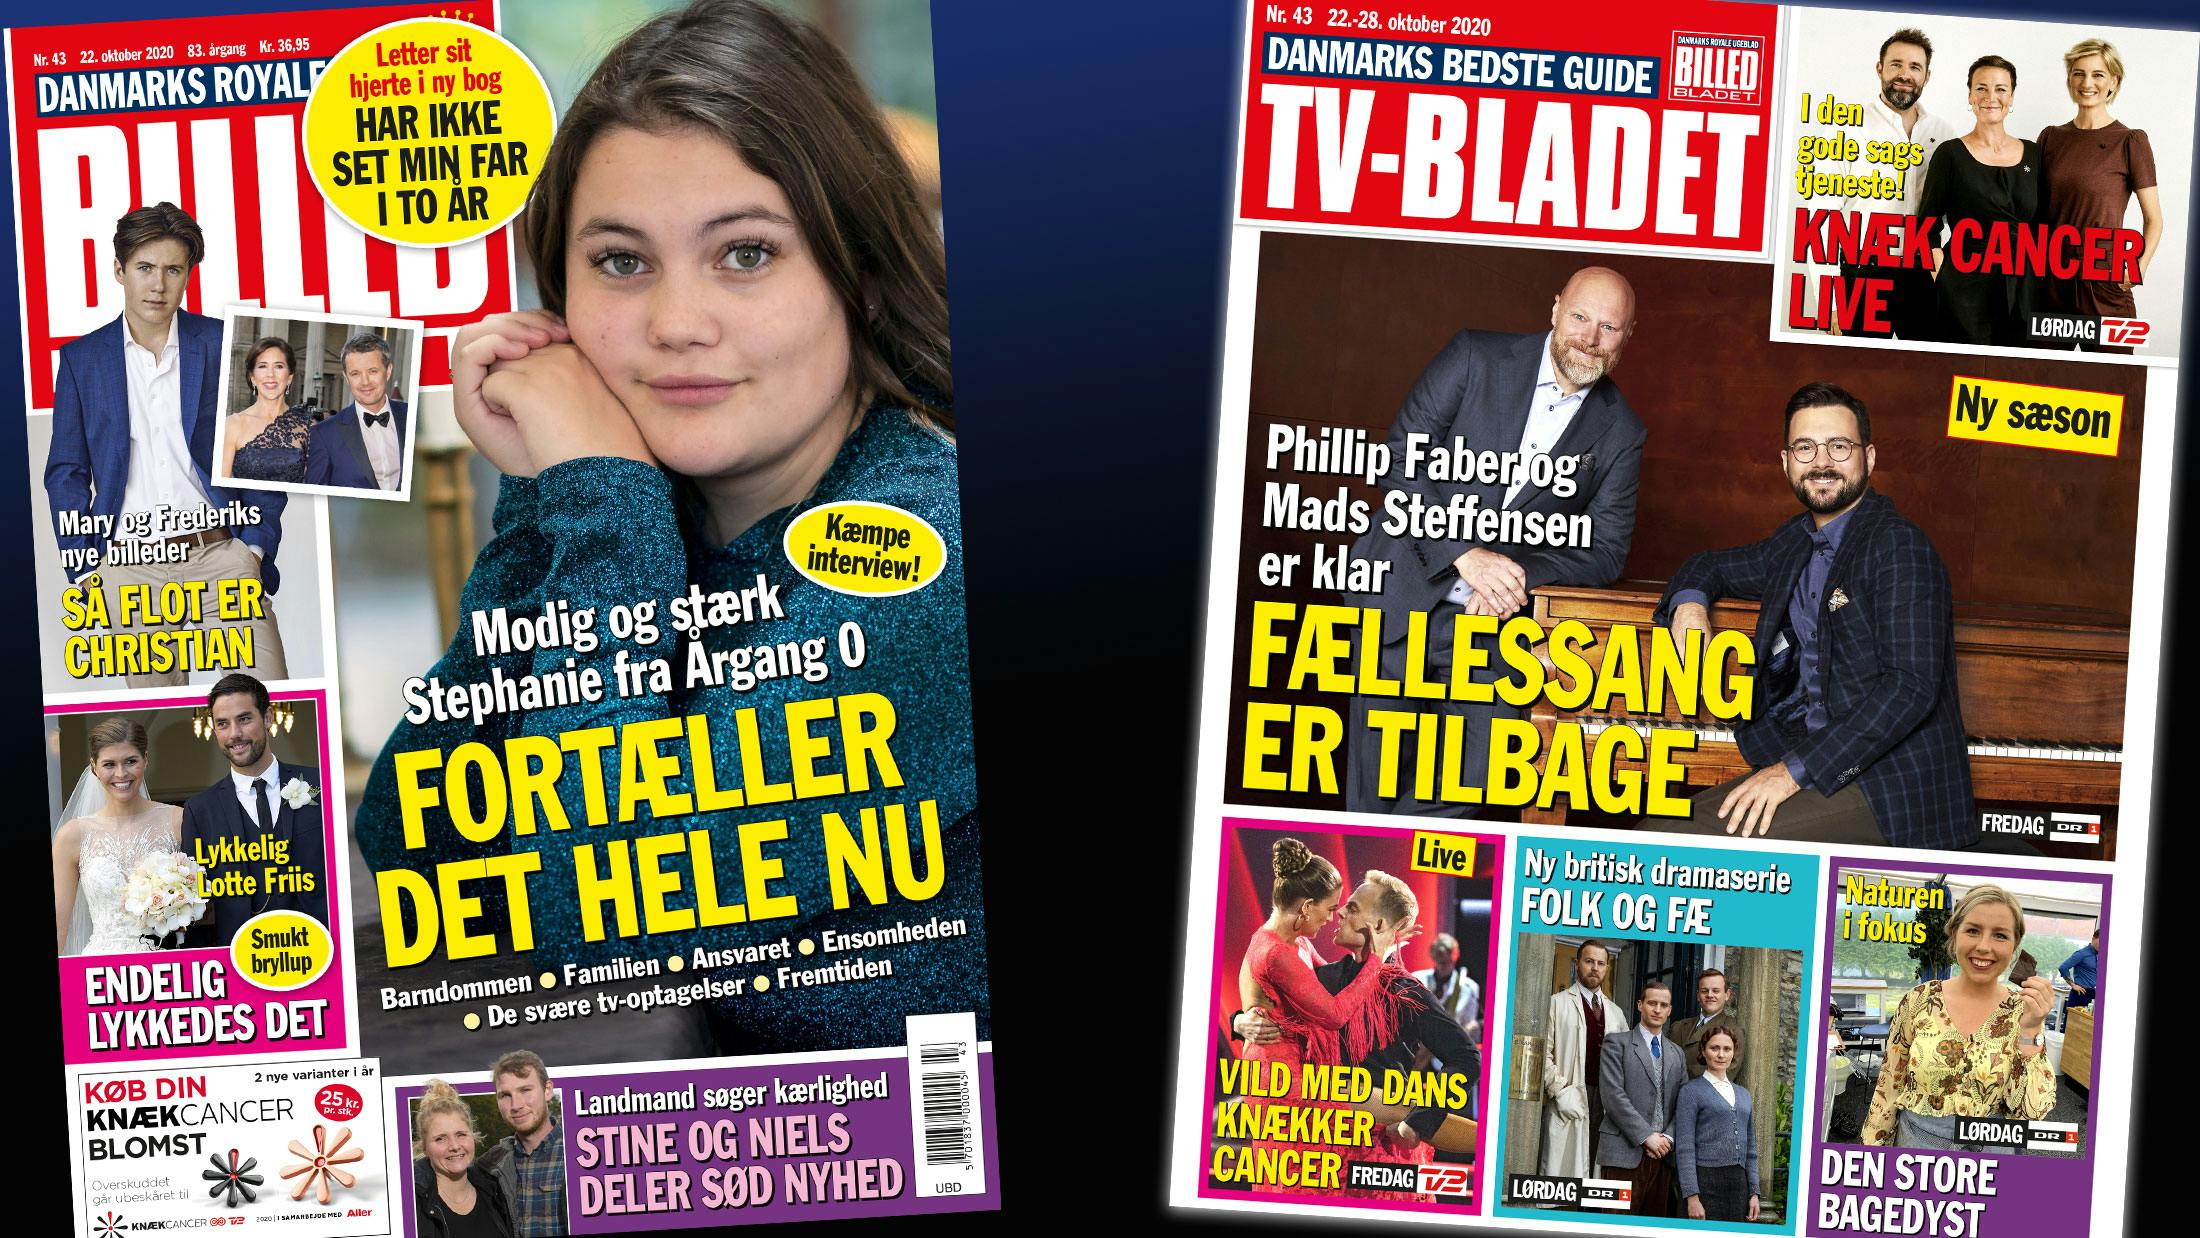 https://imgix.billedbladet.dk/media/article/webgrafik_bb43-forsider.jpg